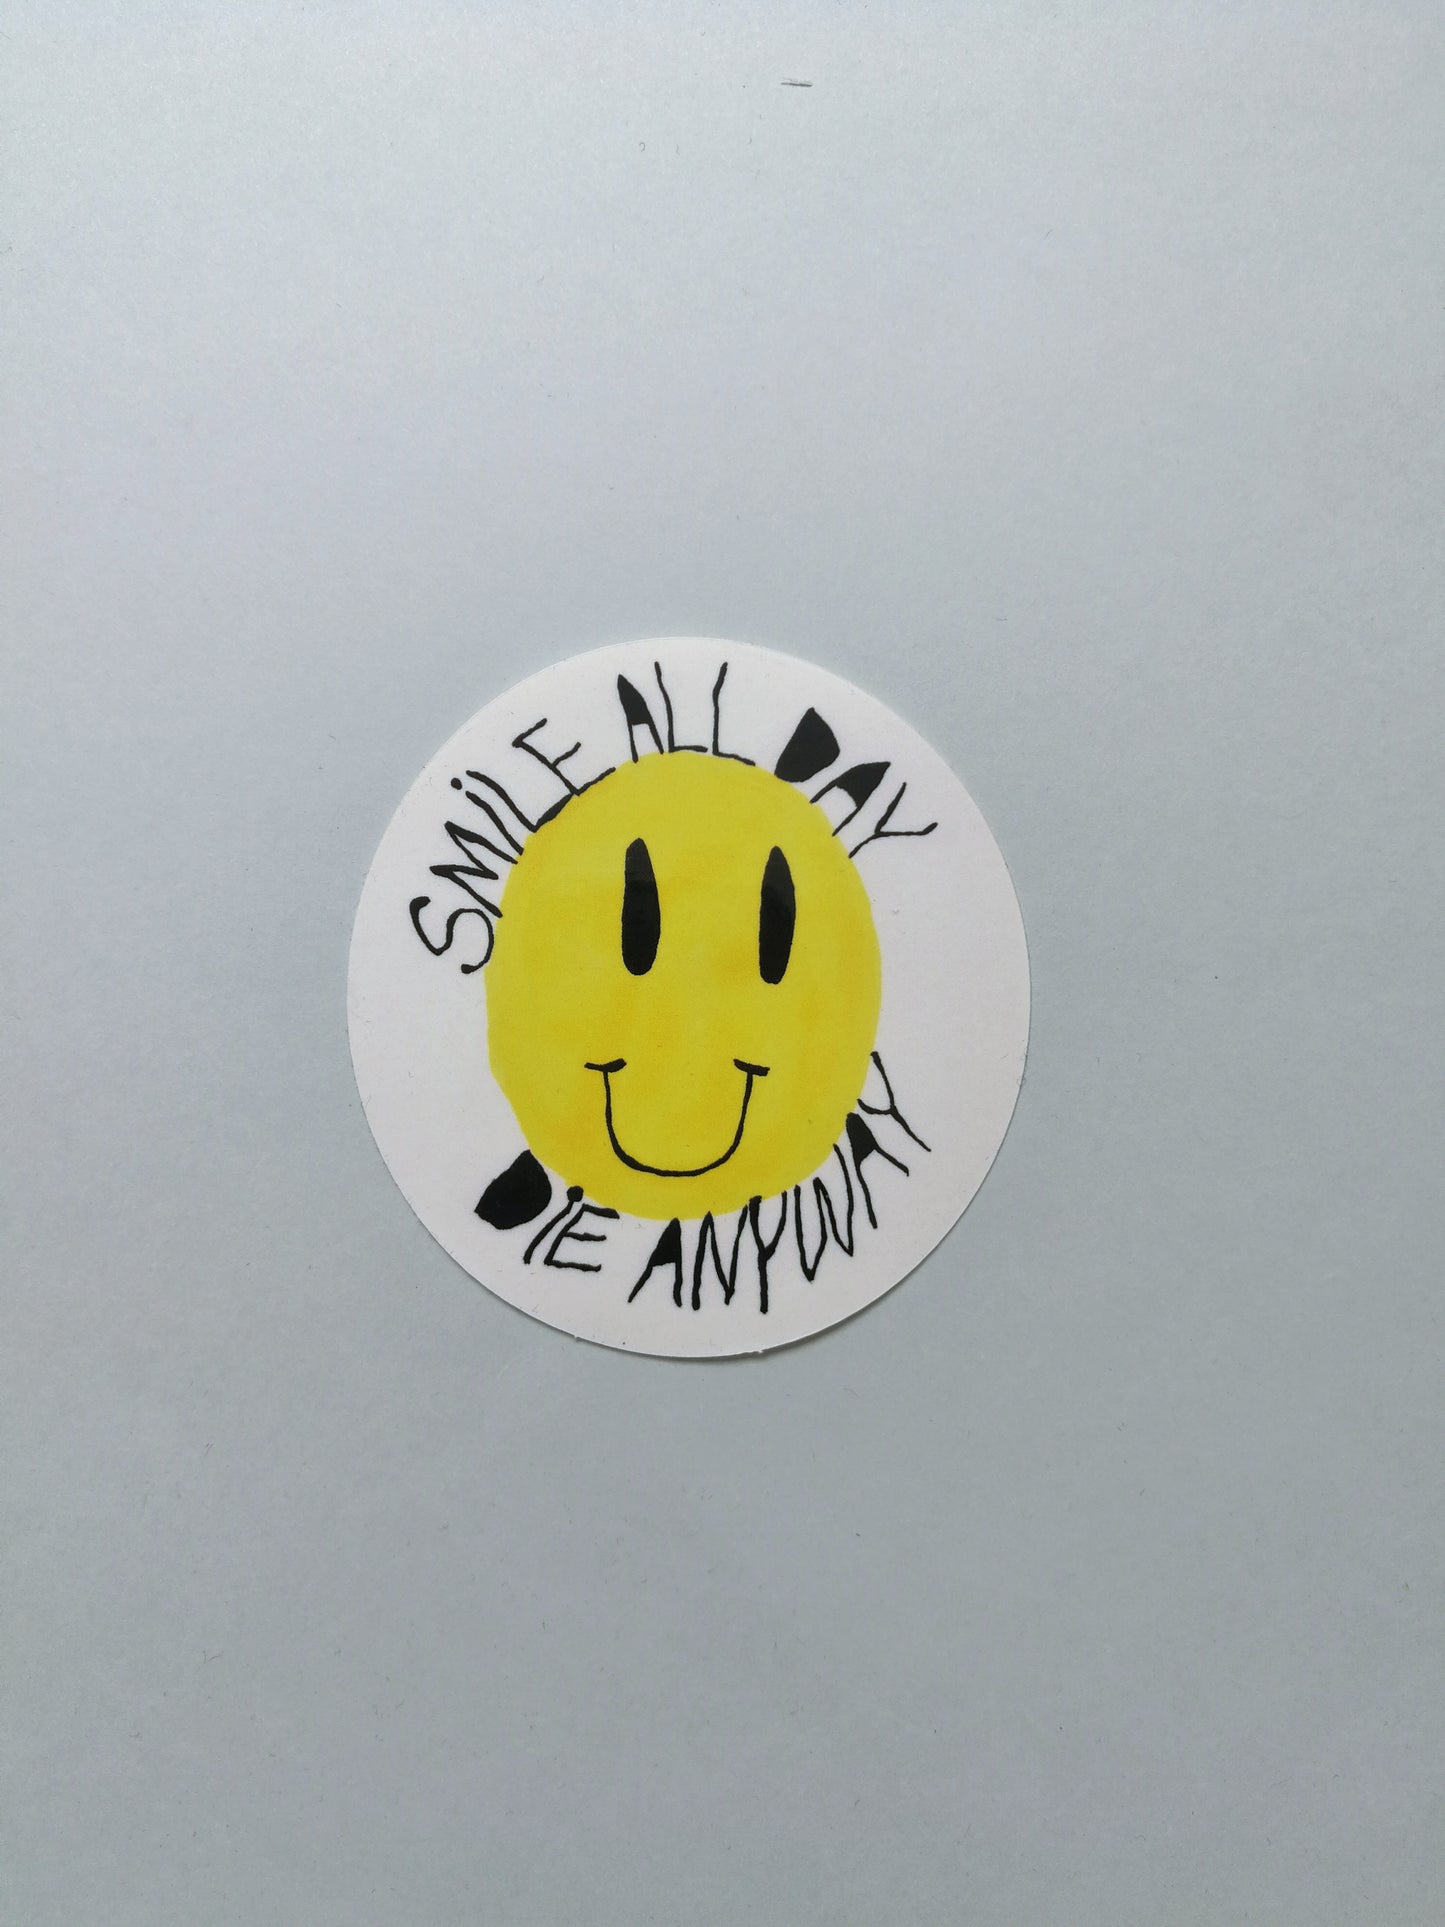 Sticker: Smile all day